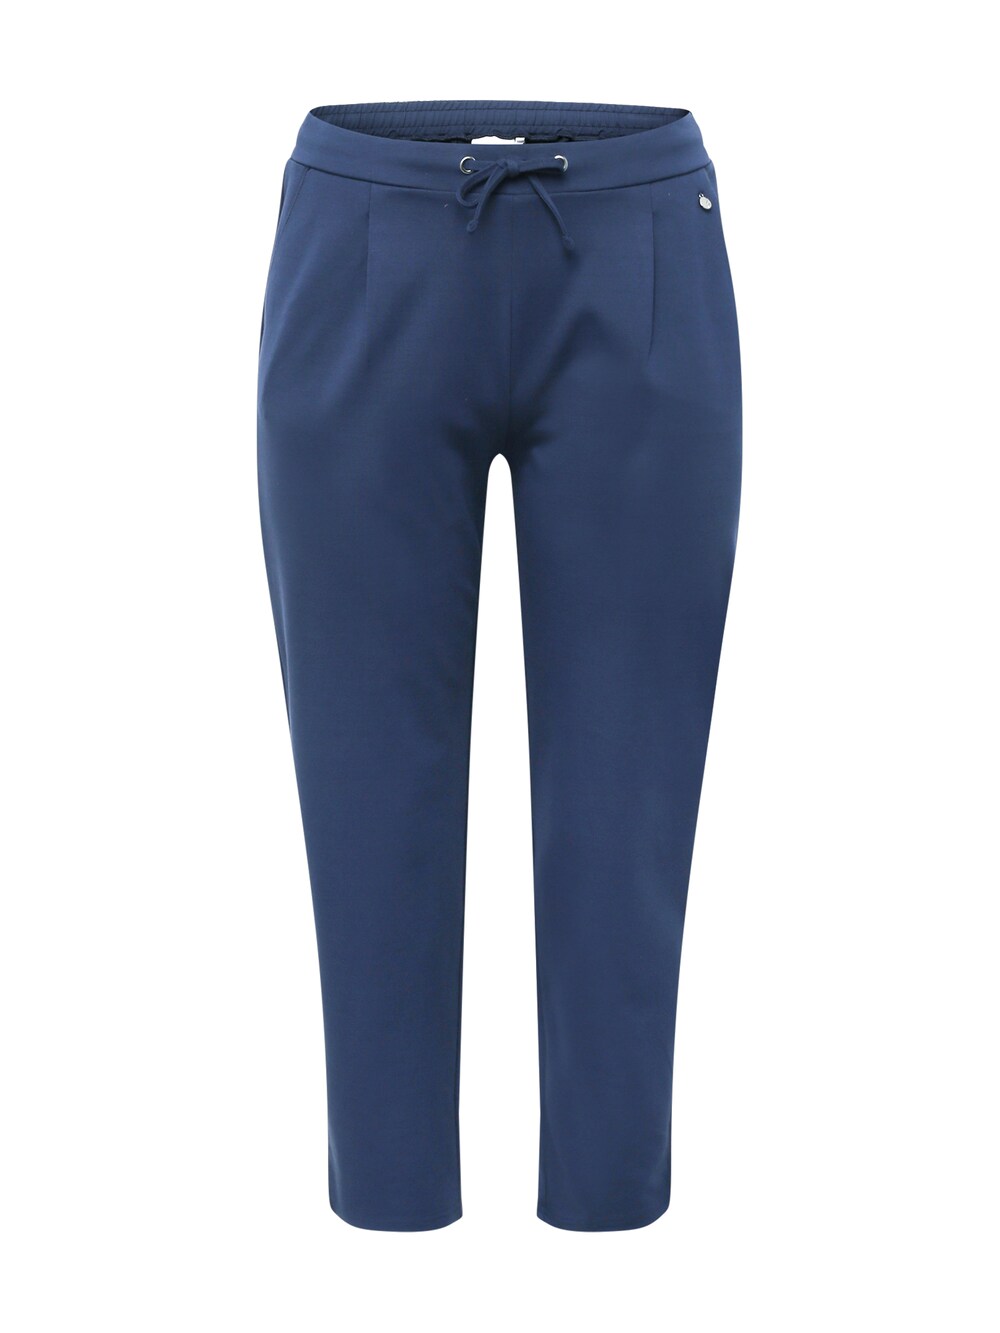 Узкие брюки со складками спереди Fransa Curve STRETCH, темно-синий